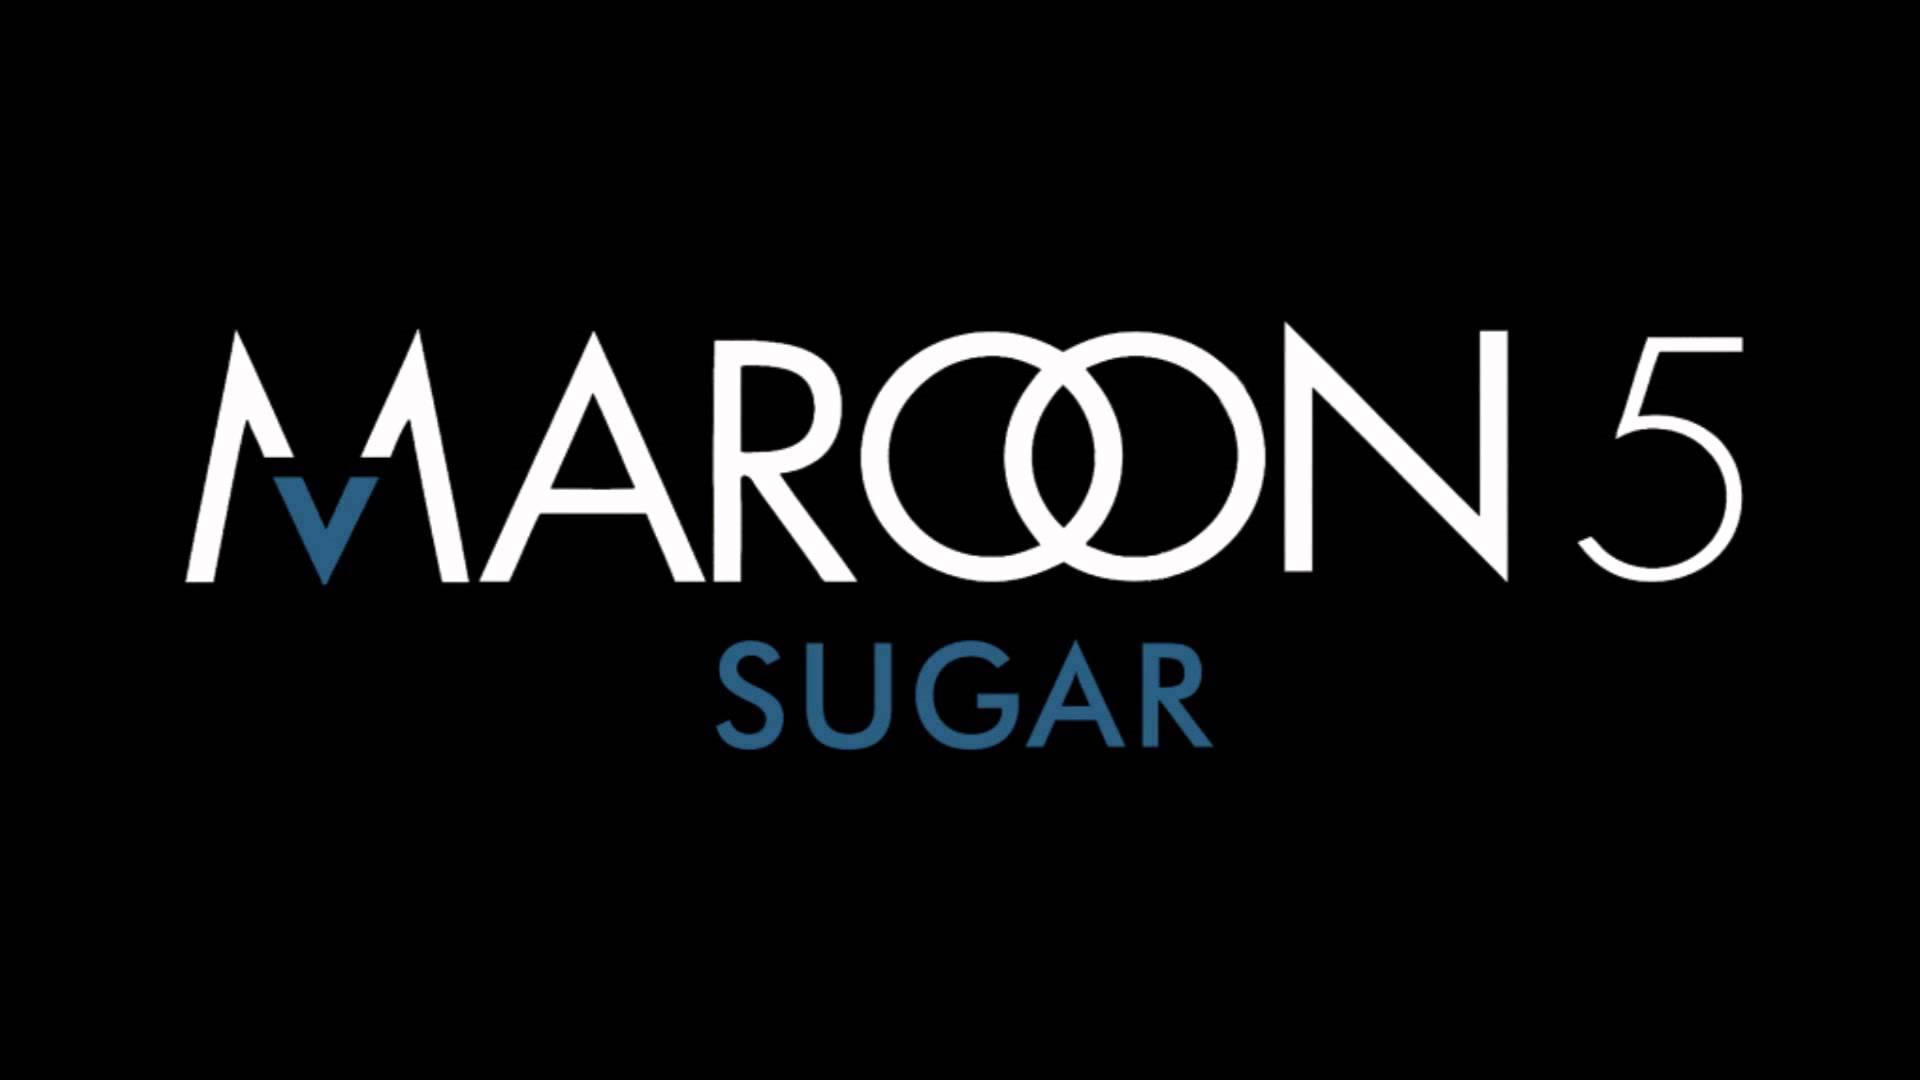 Maroon 5 Sugar Black Background Background